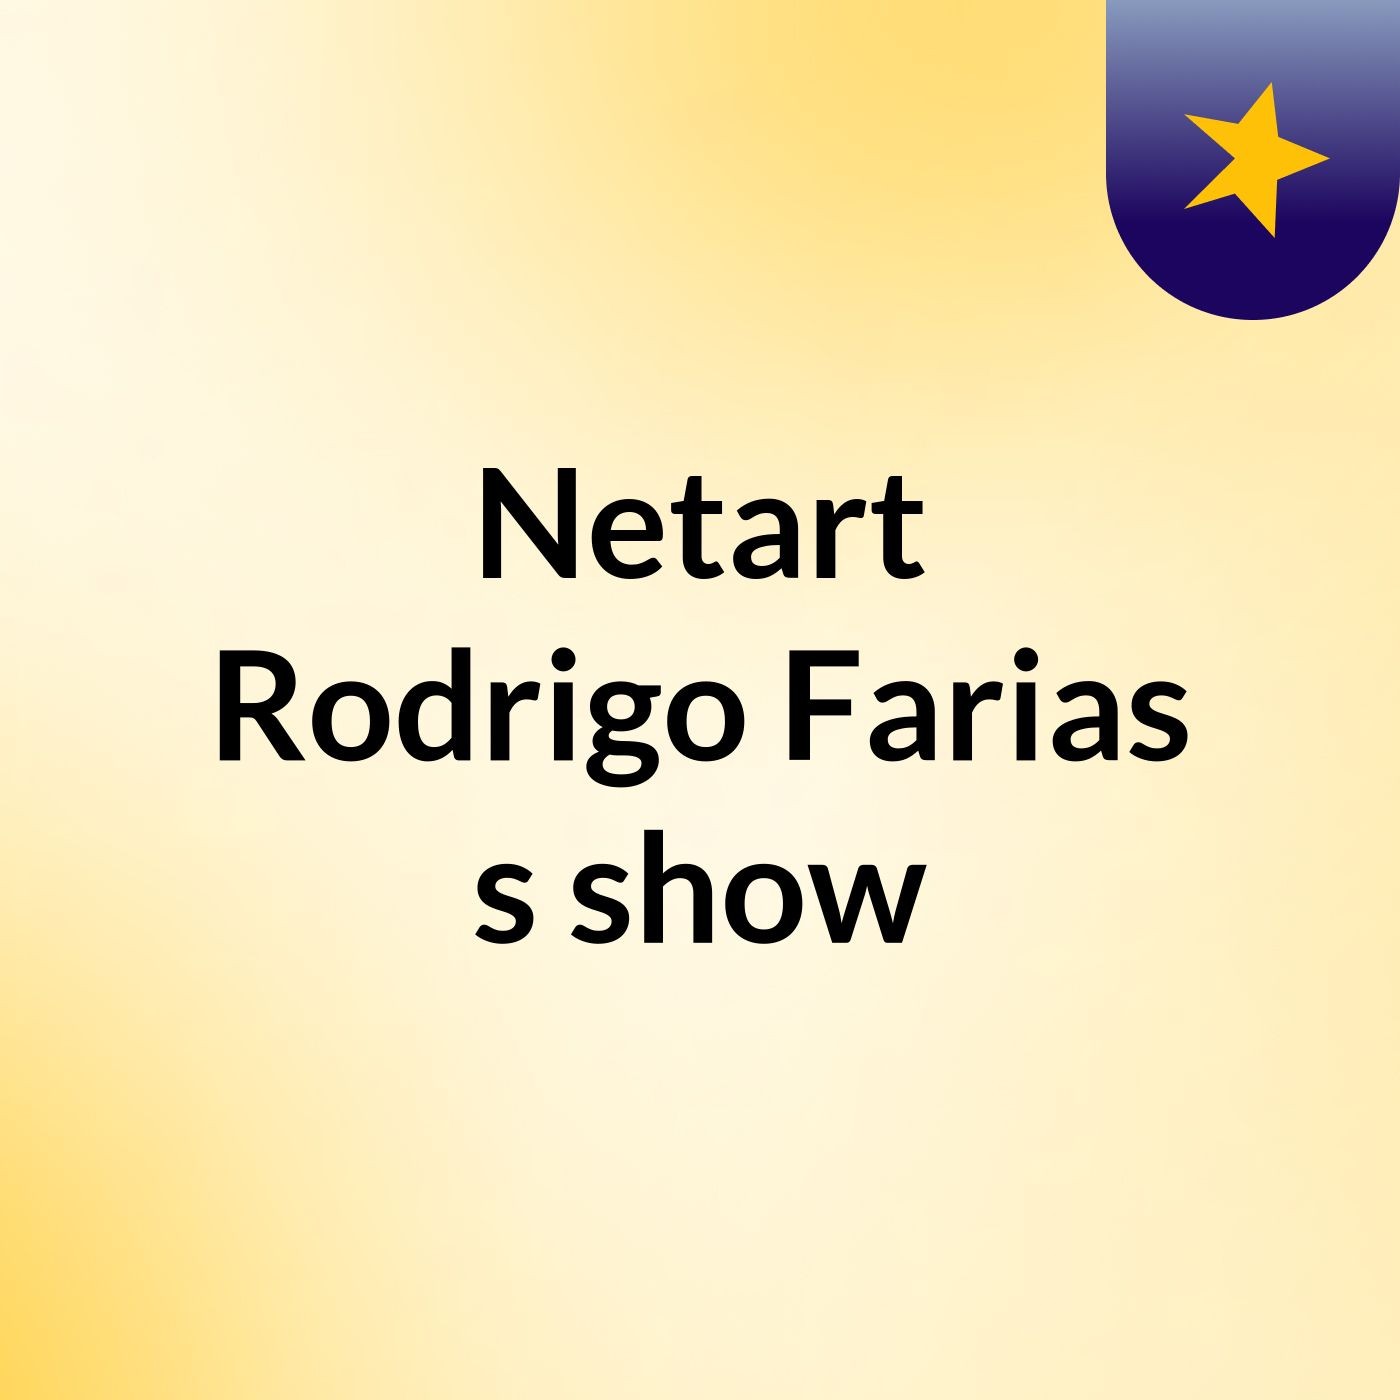 Netart Rodrigo Farias's show